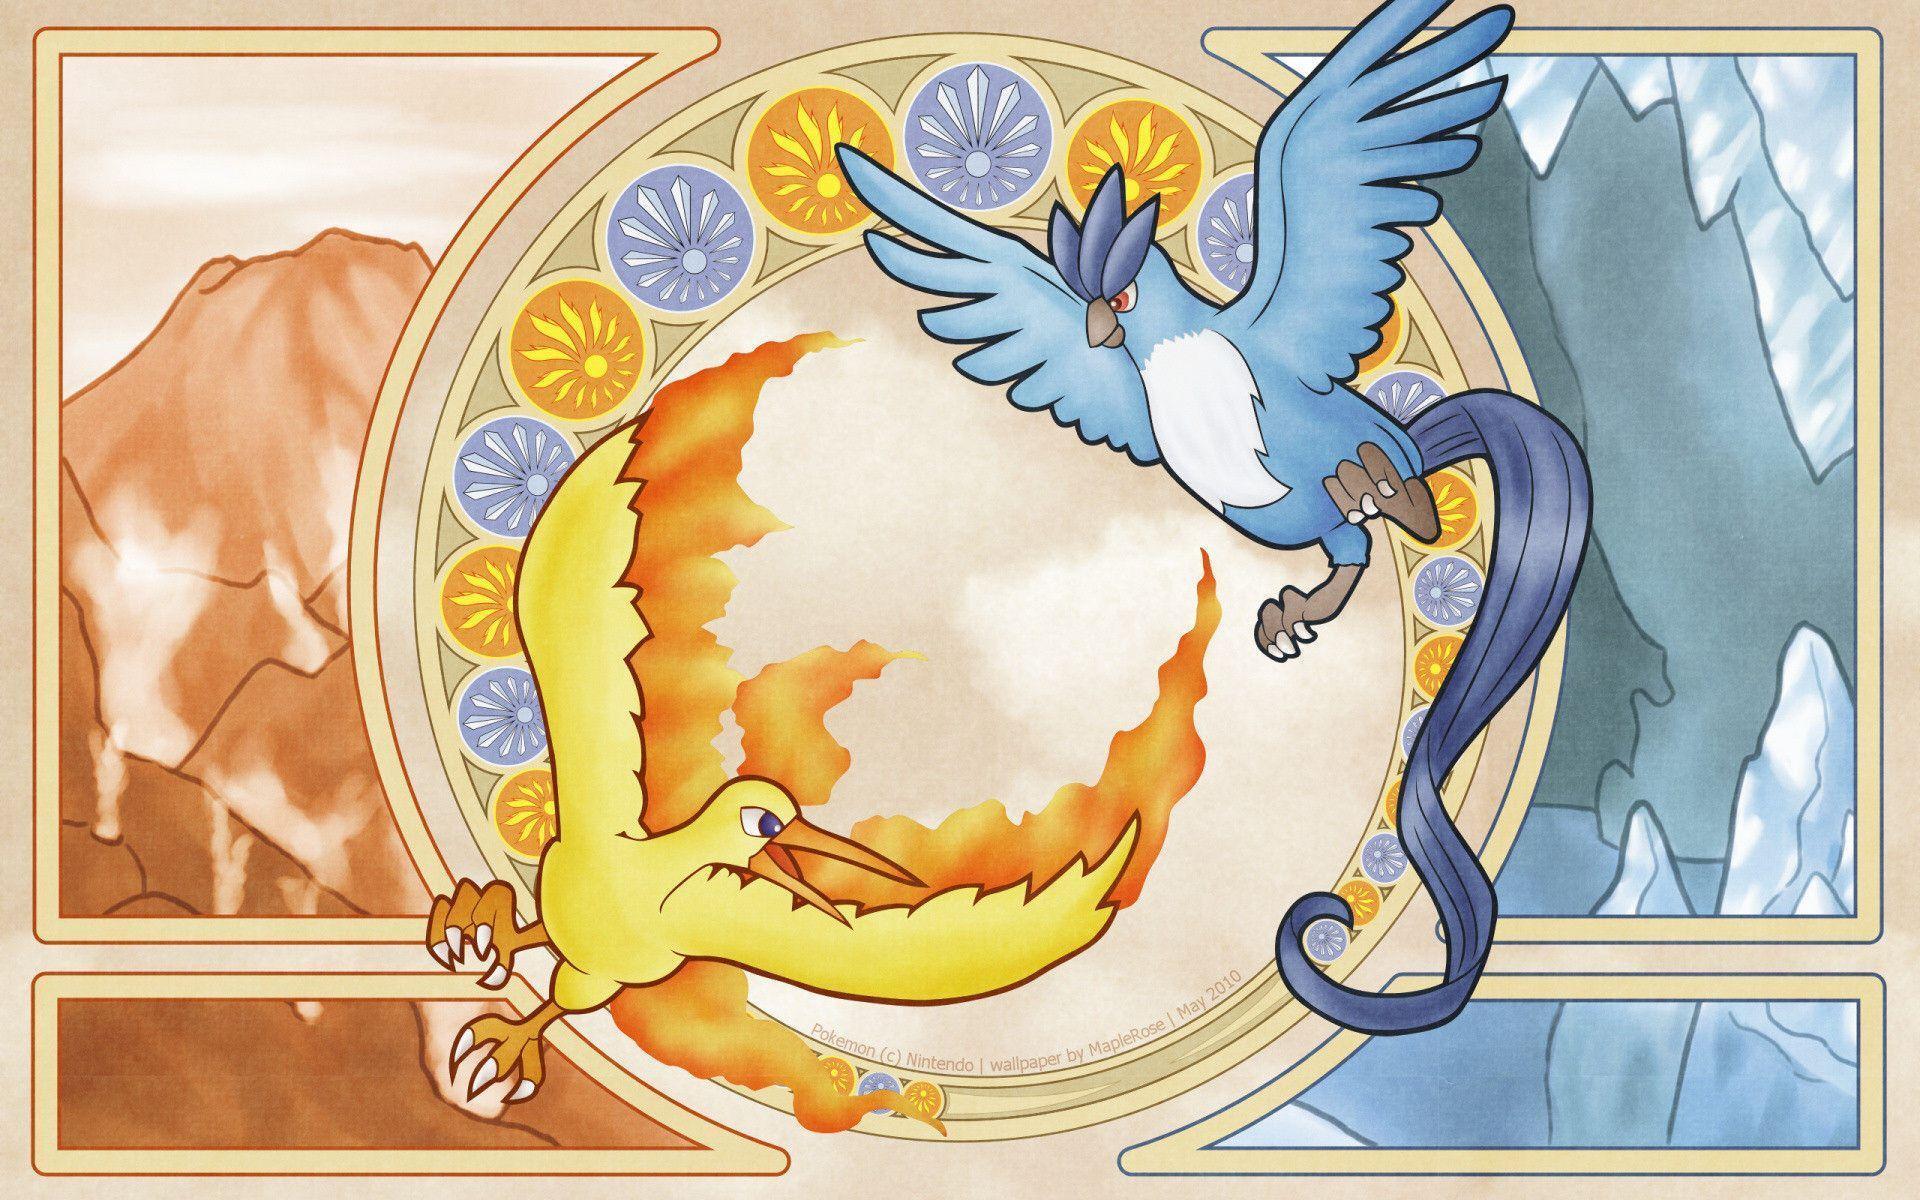 Fire Pokémon Wallpapers - Wallpaper Cave